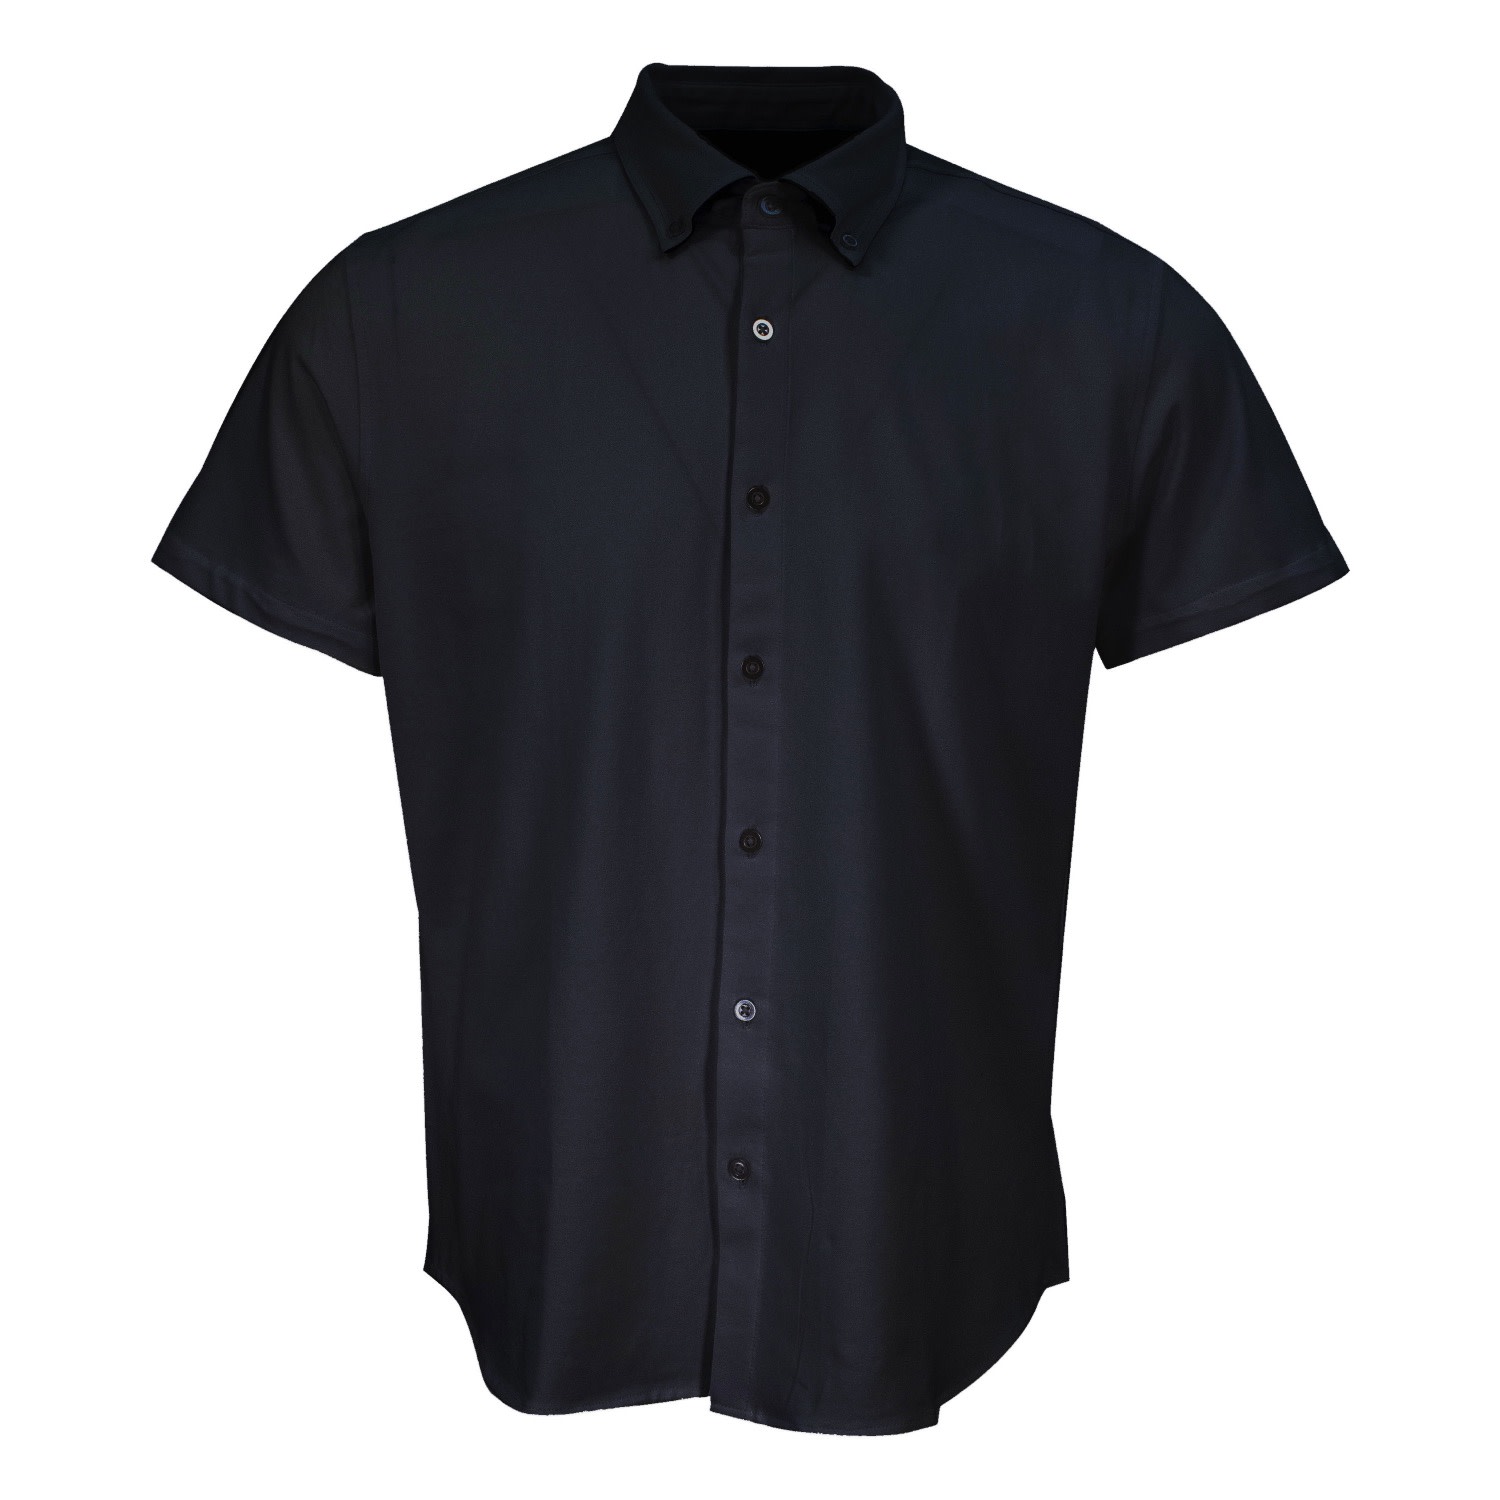 Lords Of Harlech Men's Todd Knit Shirt - Black